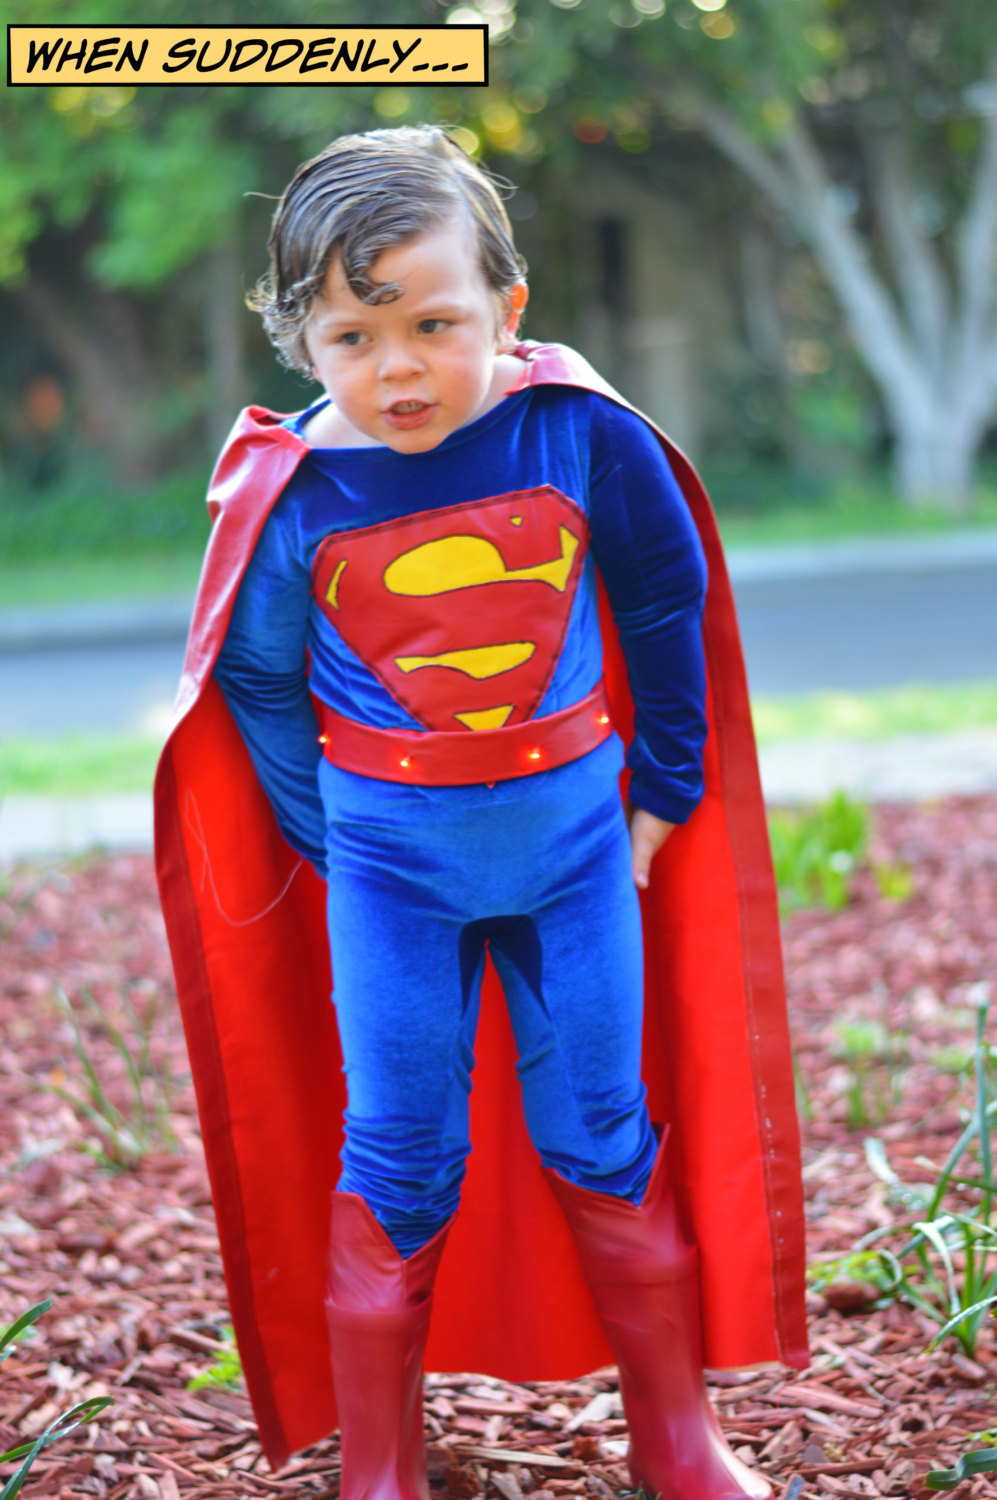 Superman costume - The Design the Stitch and the Wardrobe